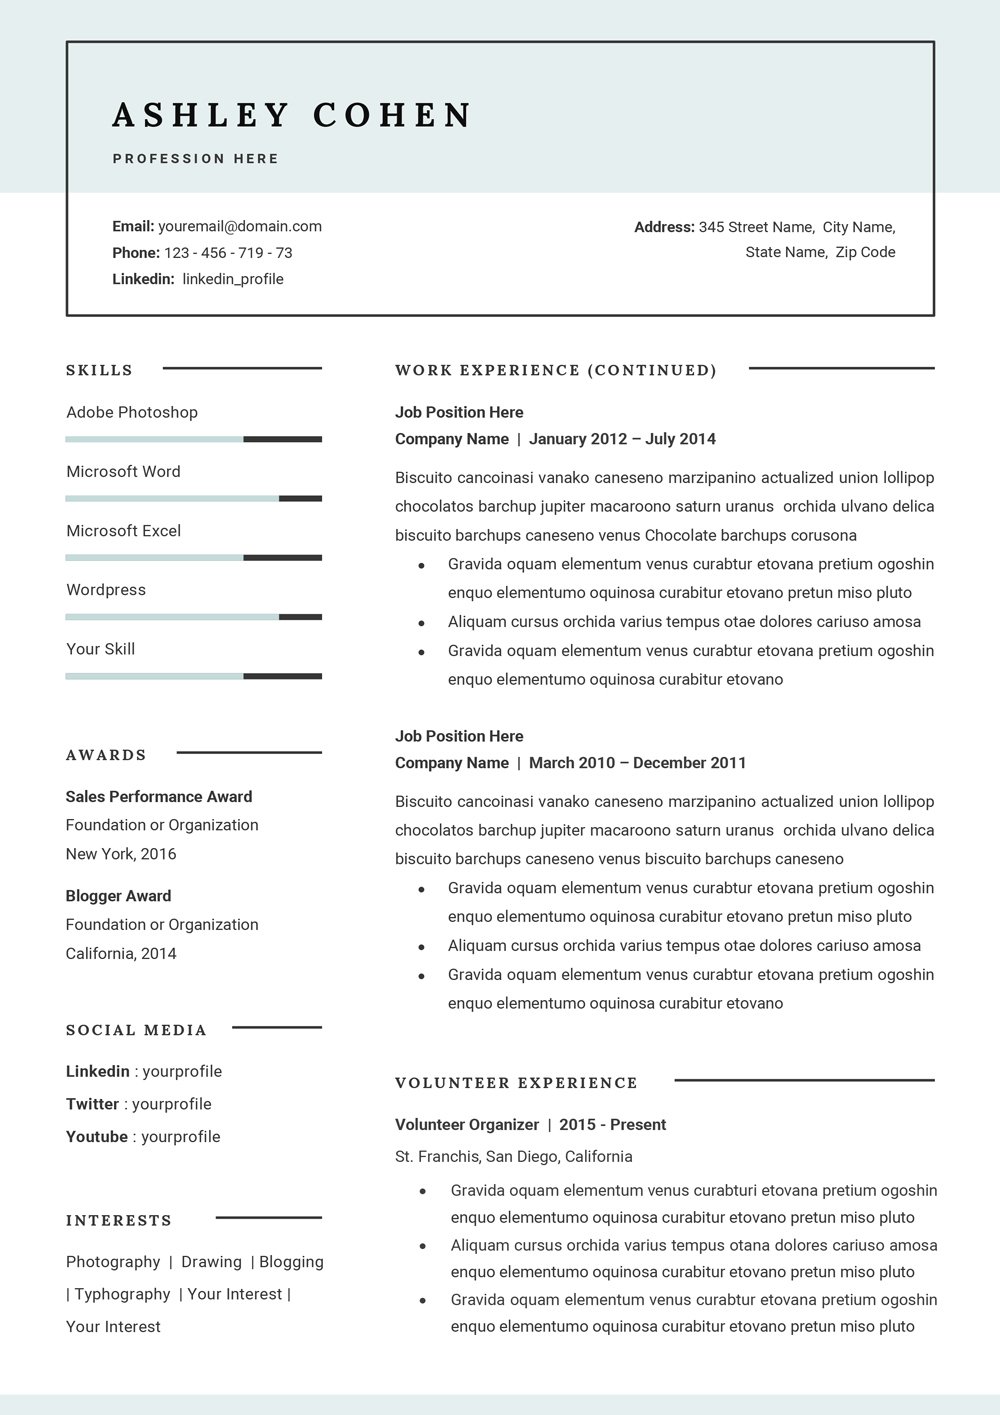 resume template ashley cohen 8 401